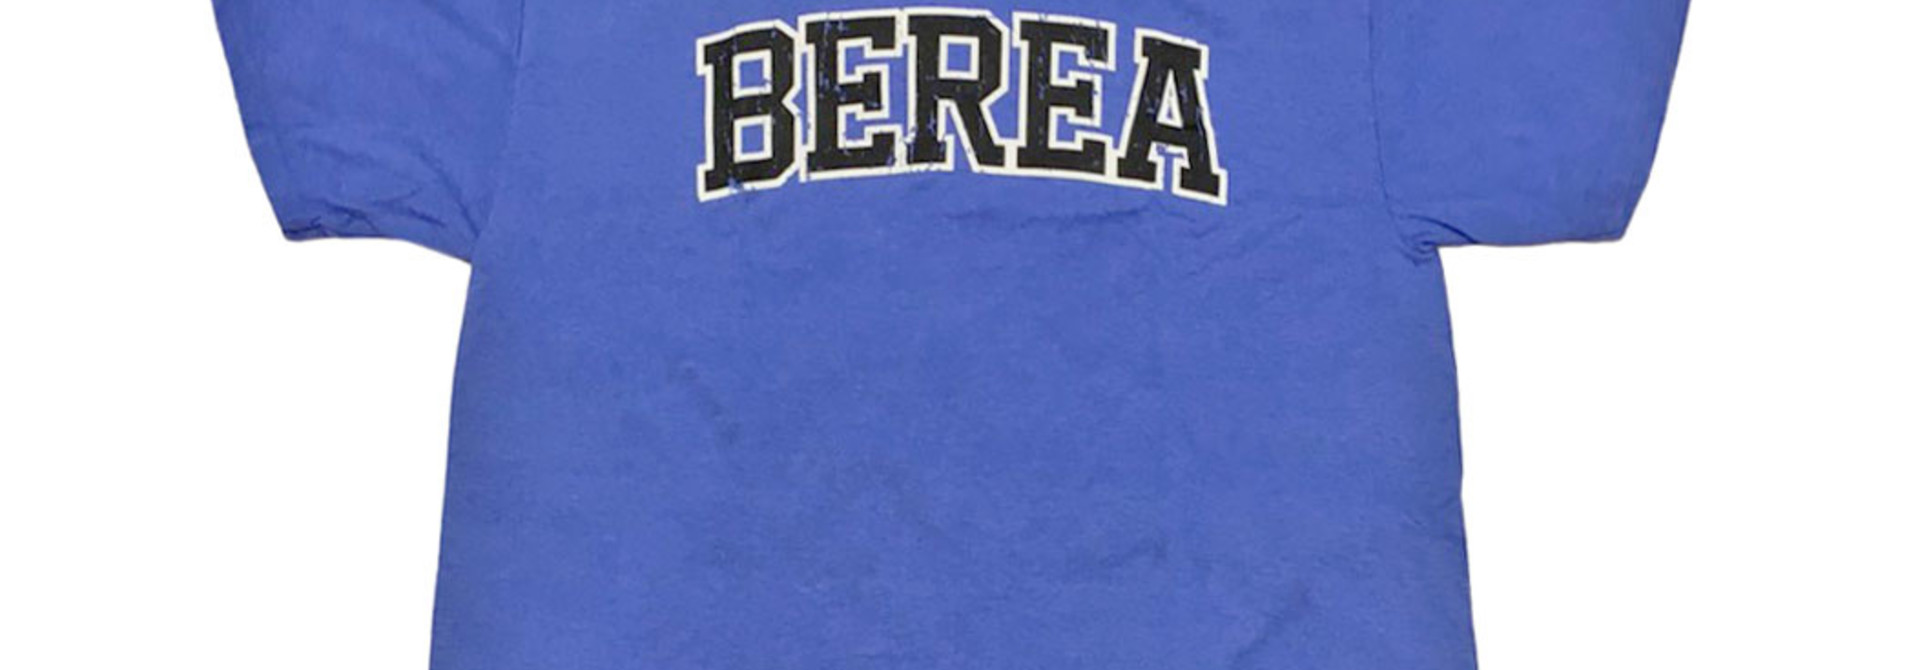 Distressed Berea T-Shirt